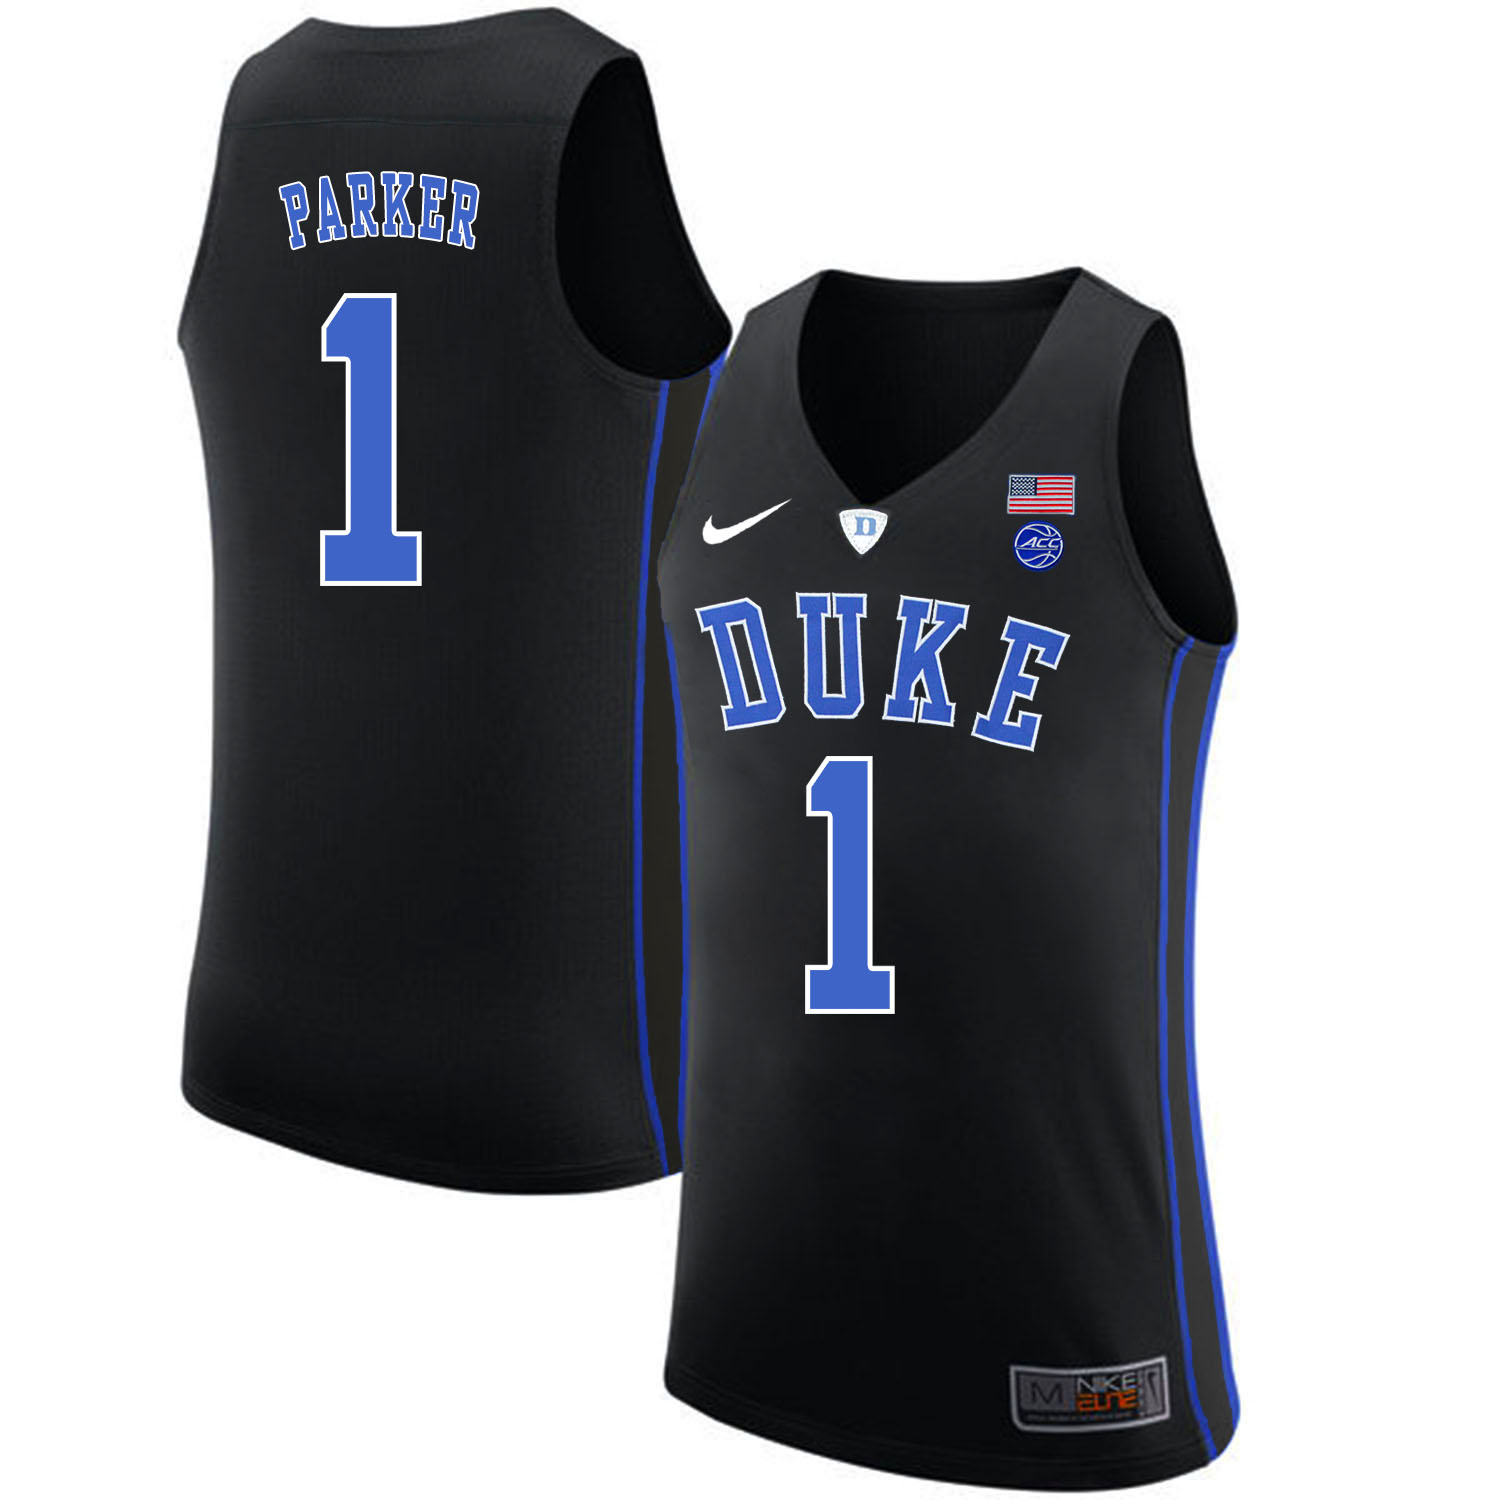 Duke Blue Devils 1 Jabari Parker Black Nike College Basketabll Jersey